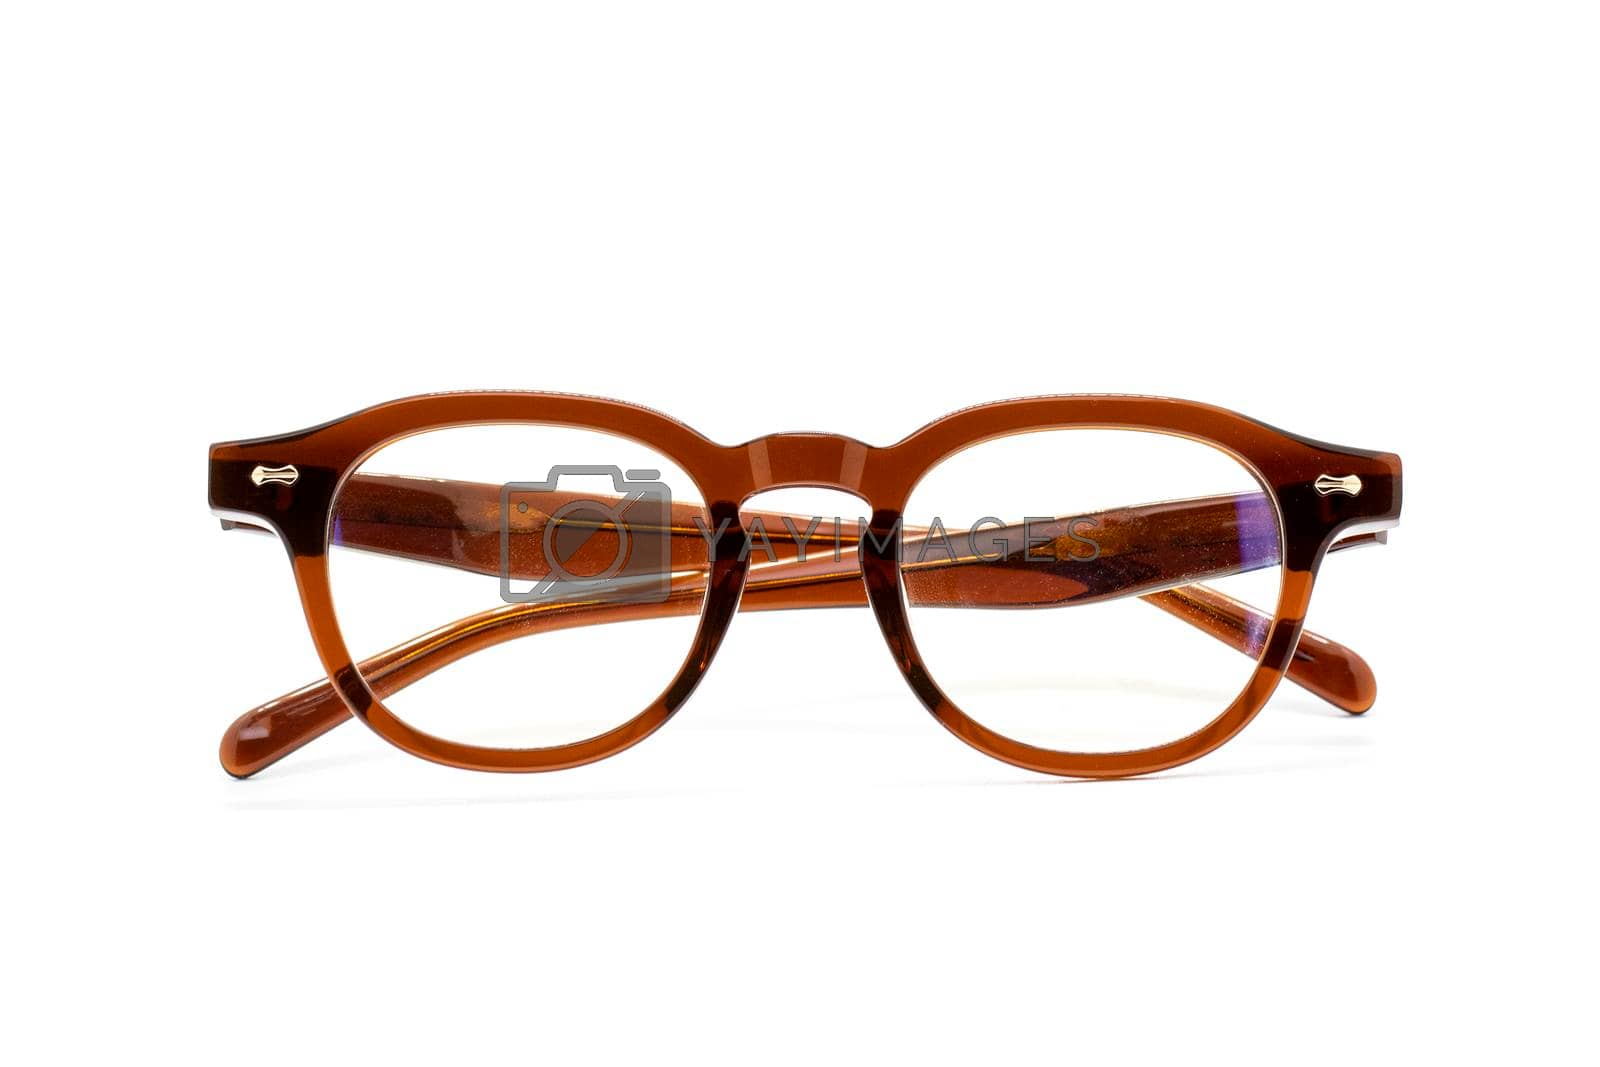 Royalty free image of Image of modern fashionable spectacles isolated on white background, Eyewear, Glasses. by yod67